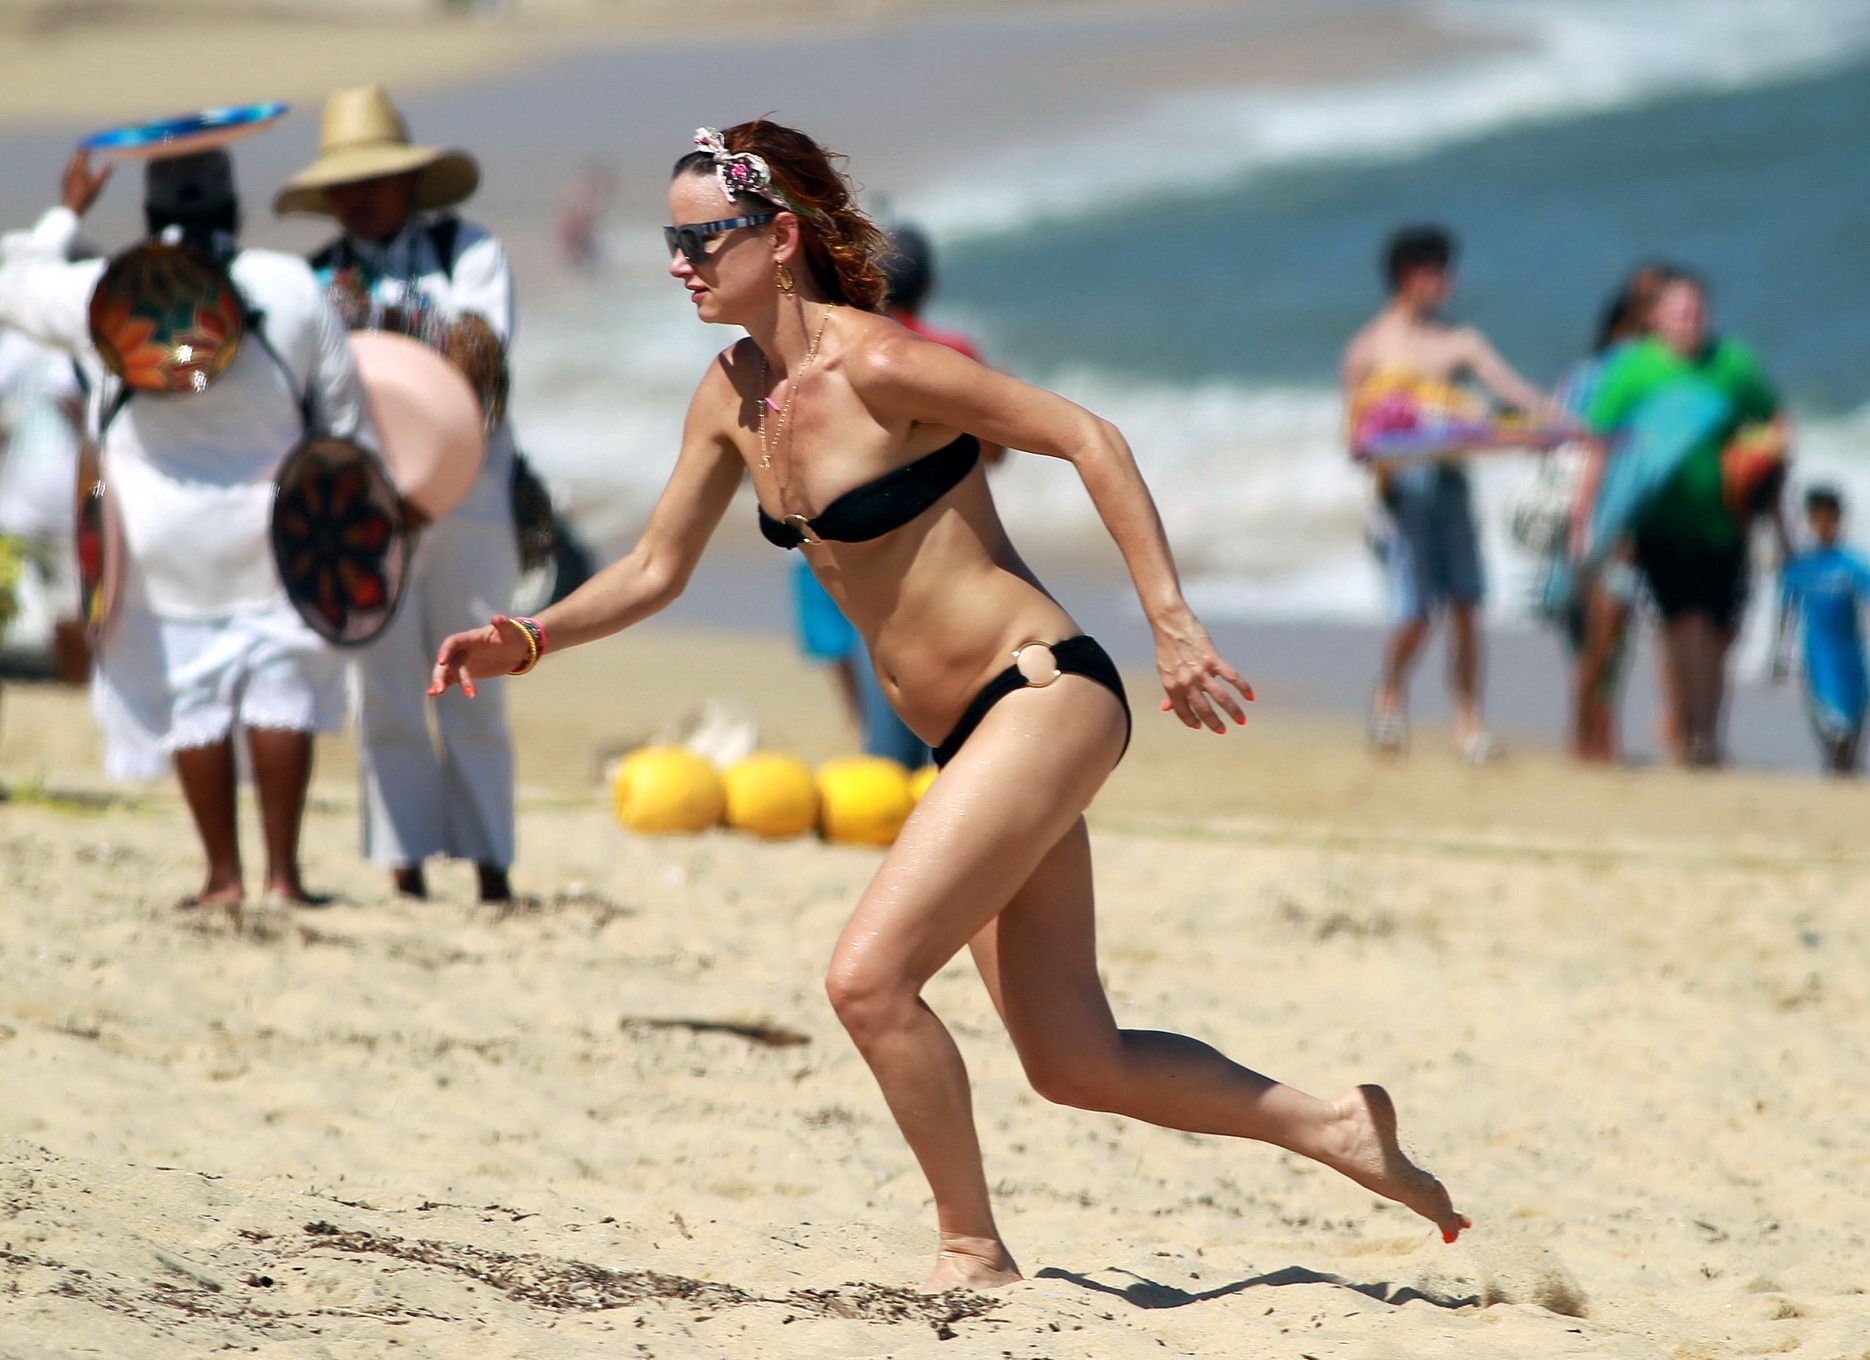 Juliette Lewis wearing a tiny black bikini on a beach in Mexico #75254207